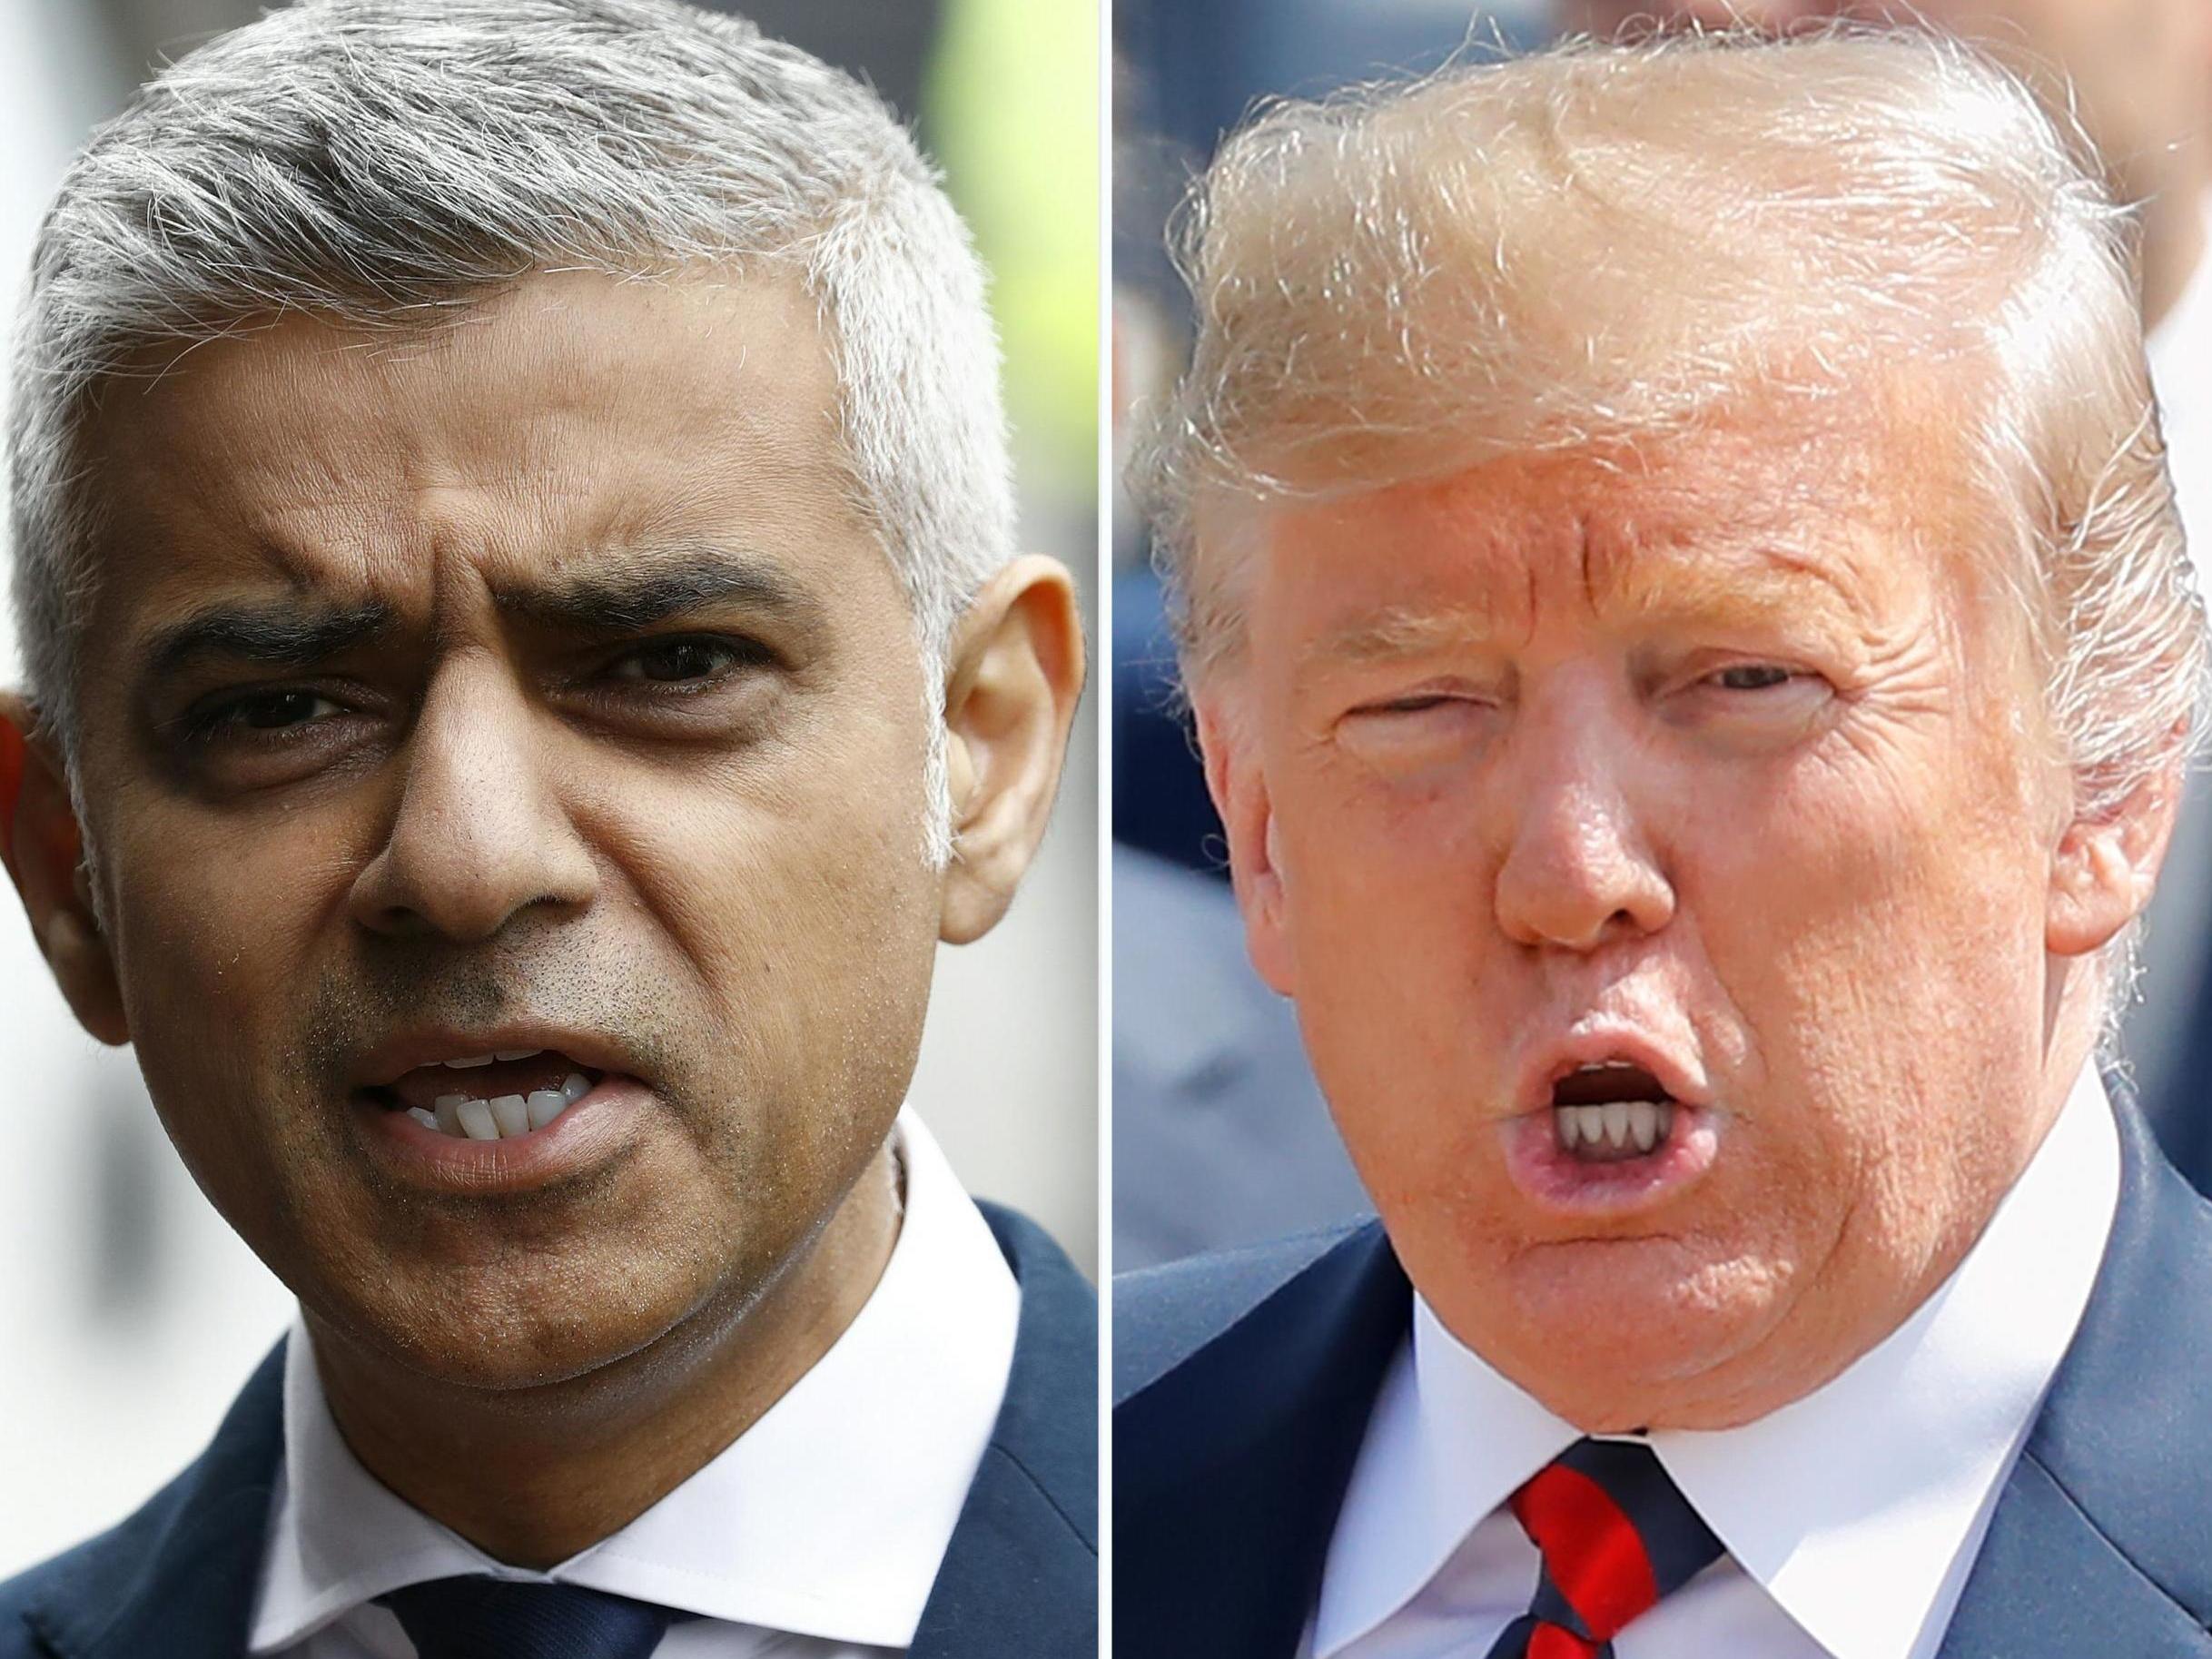 Trump attacks Sadiq Khan after spate of murders: 'London needs a new mayor'